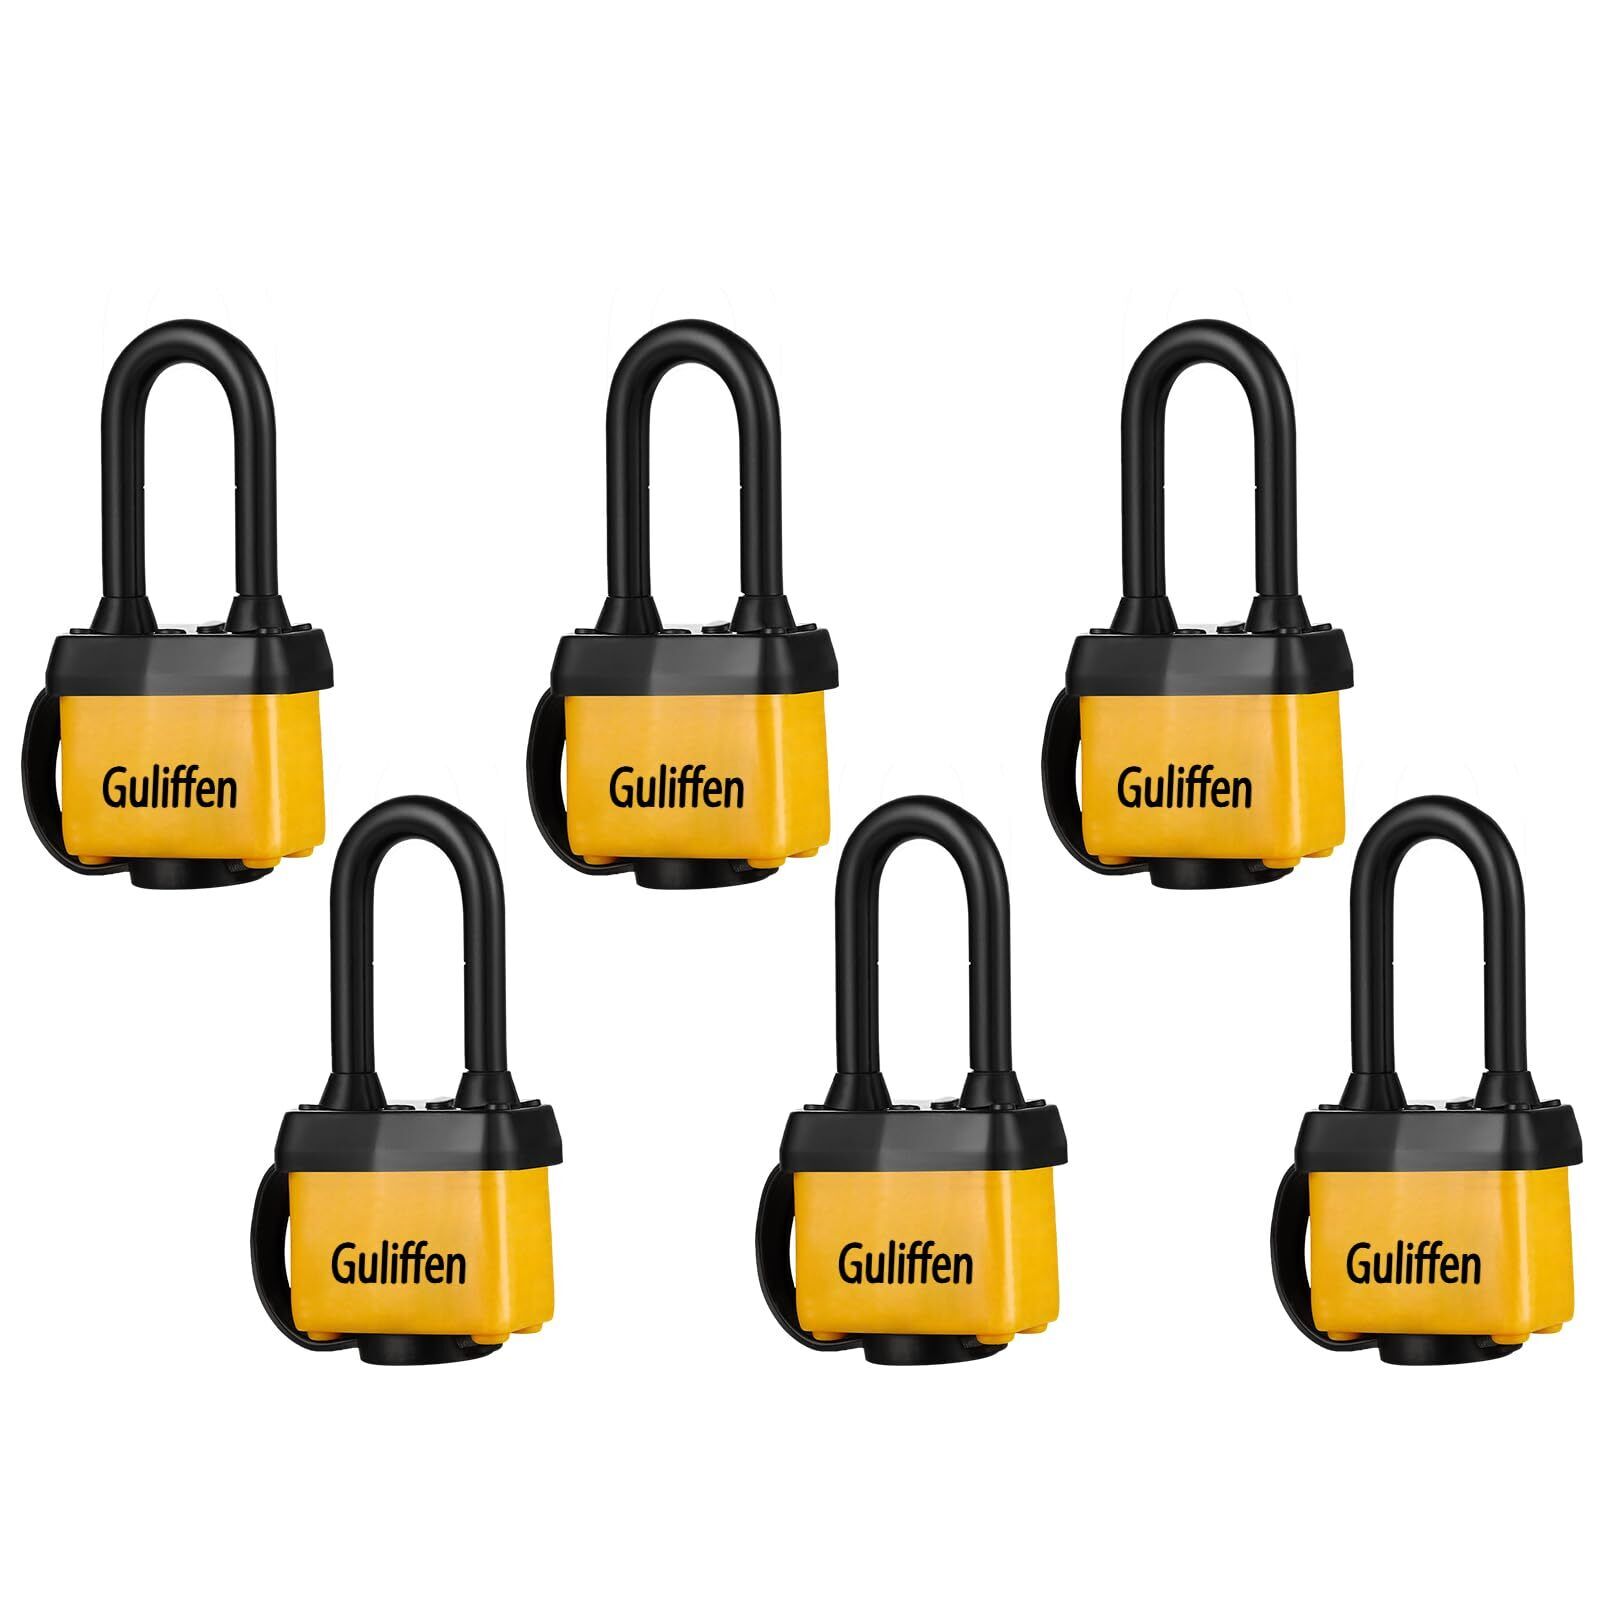 Weatherproof Laminated Steel Locks with Keys6 Pack Padlocks with Same Key for O